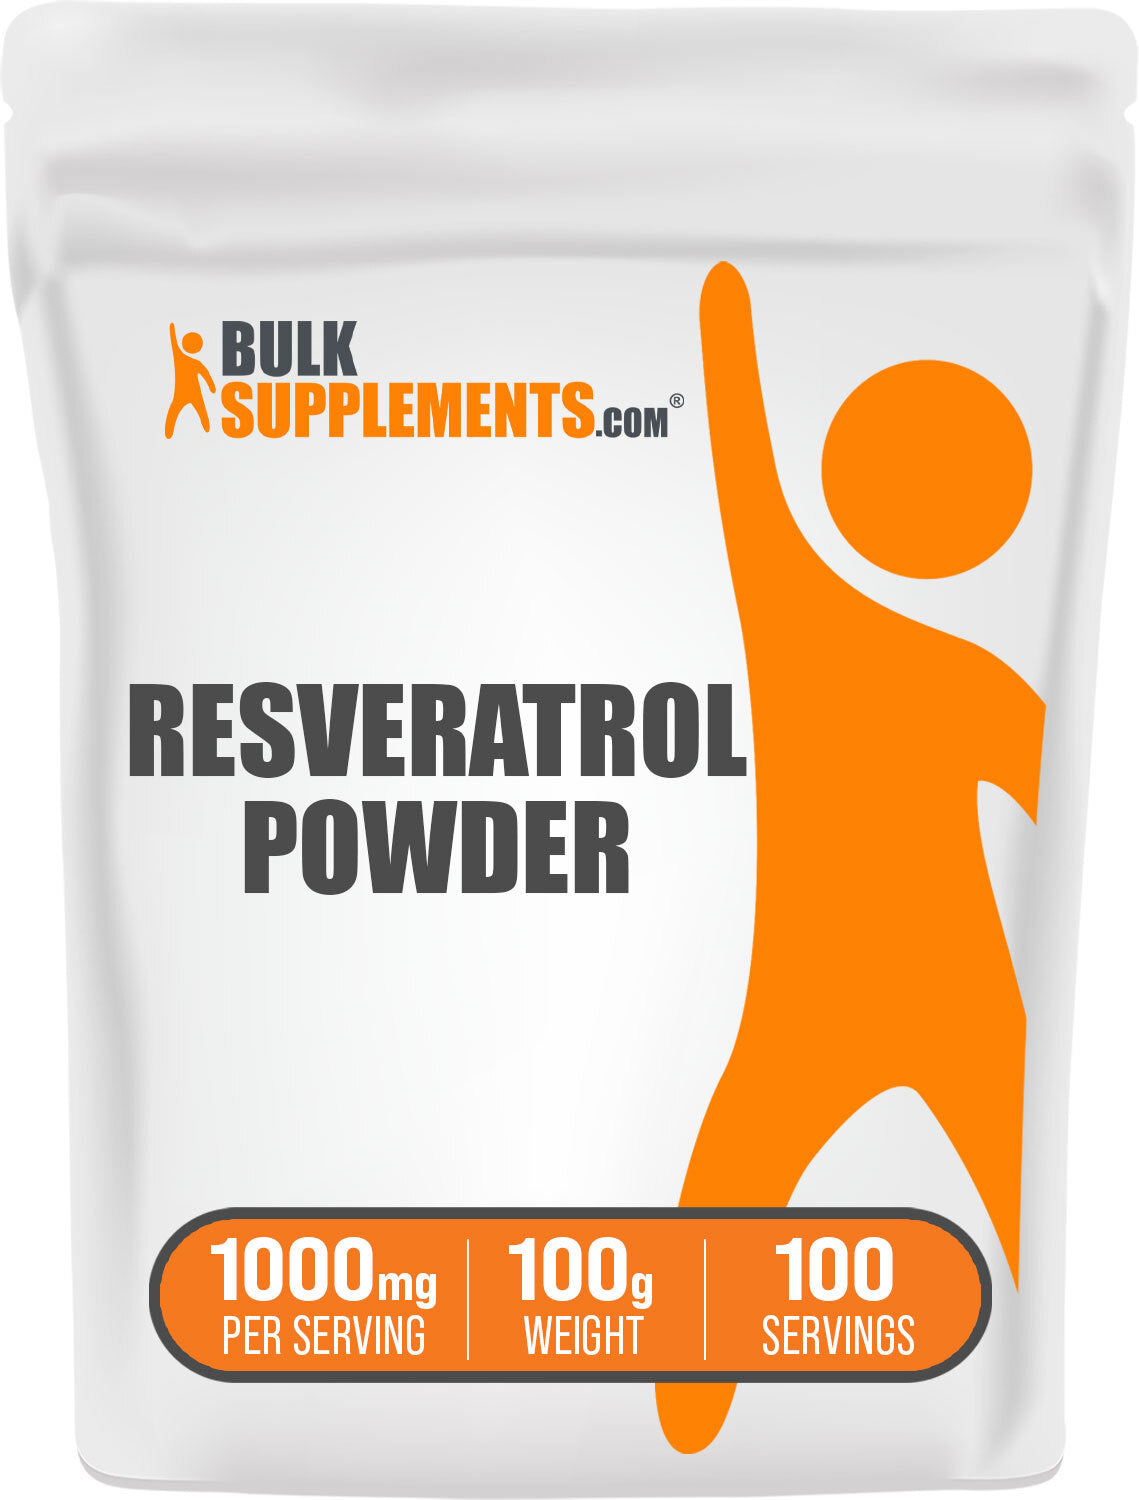 BulkSupplements Resveratrol Powder 100g bag